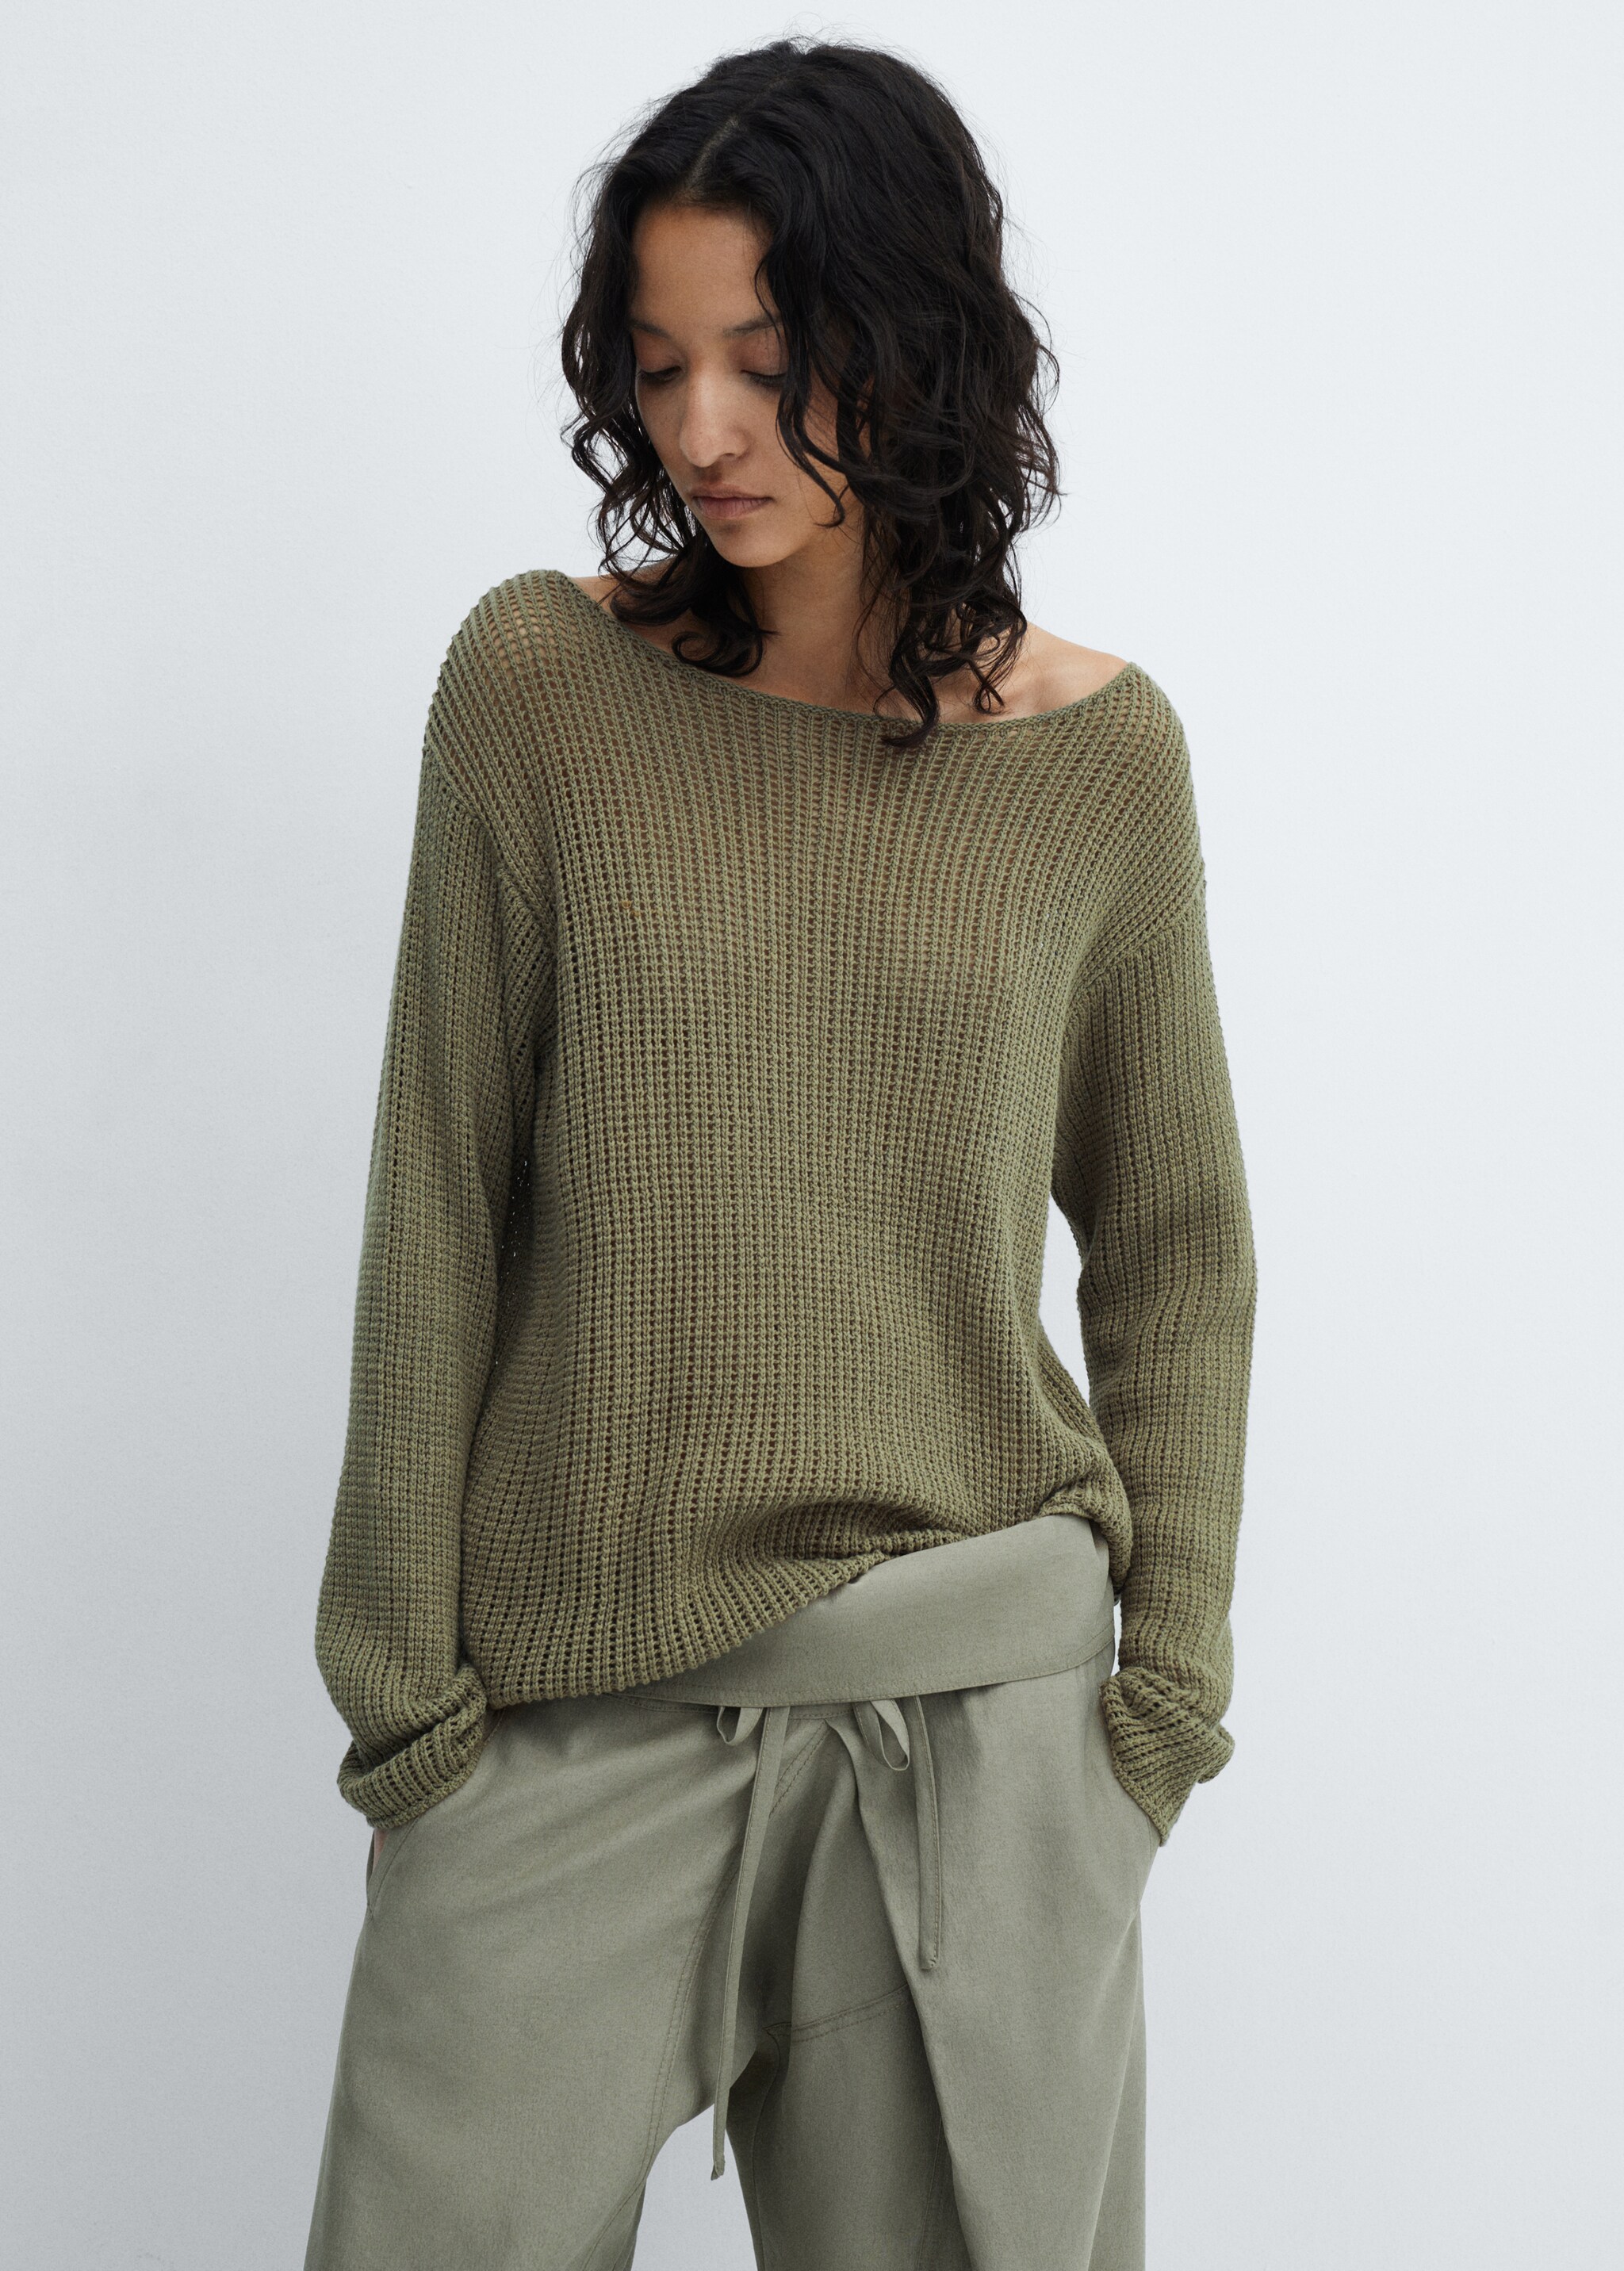 Boat-neck knitted sweater - Medium plane